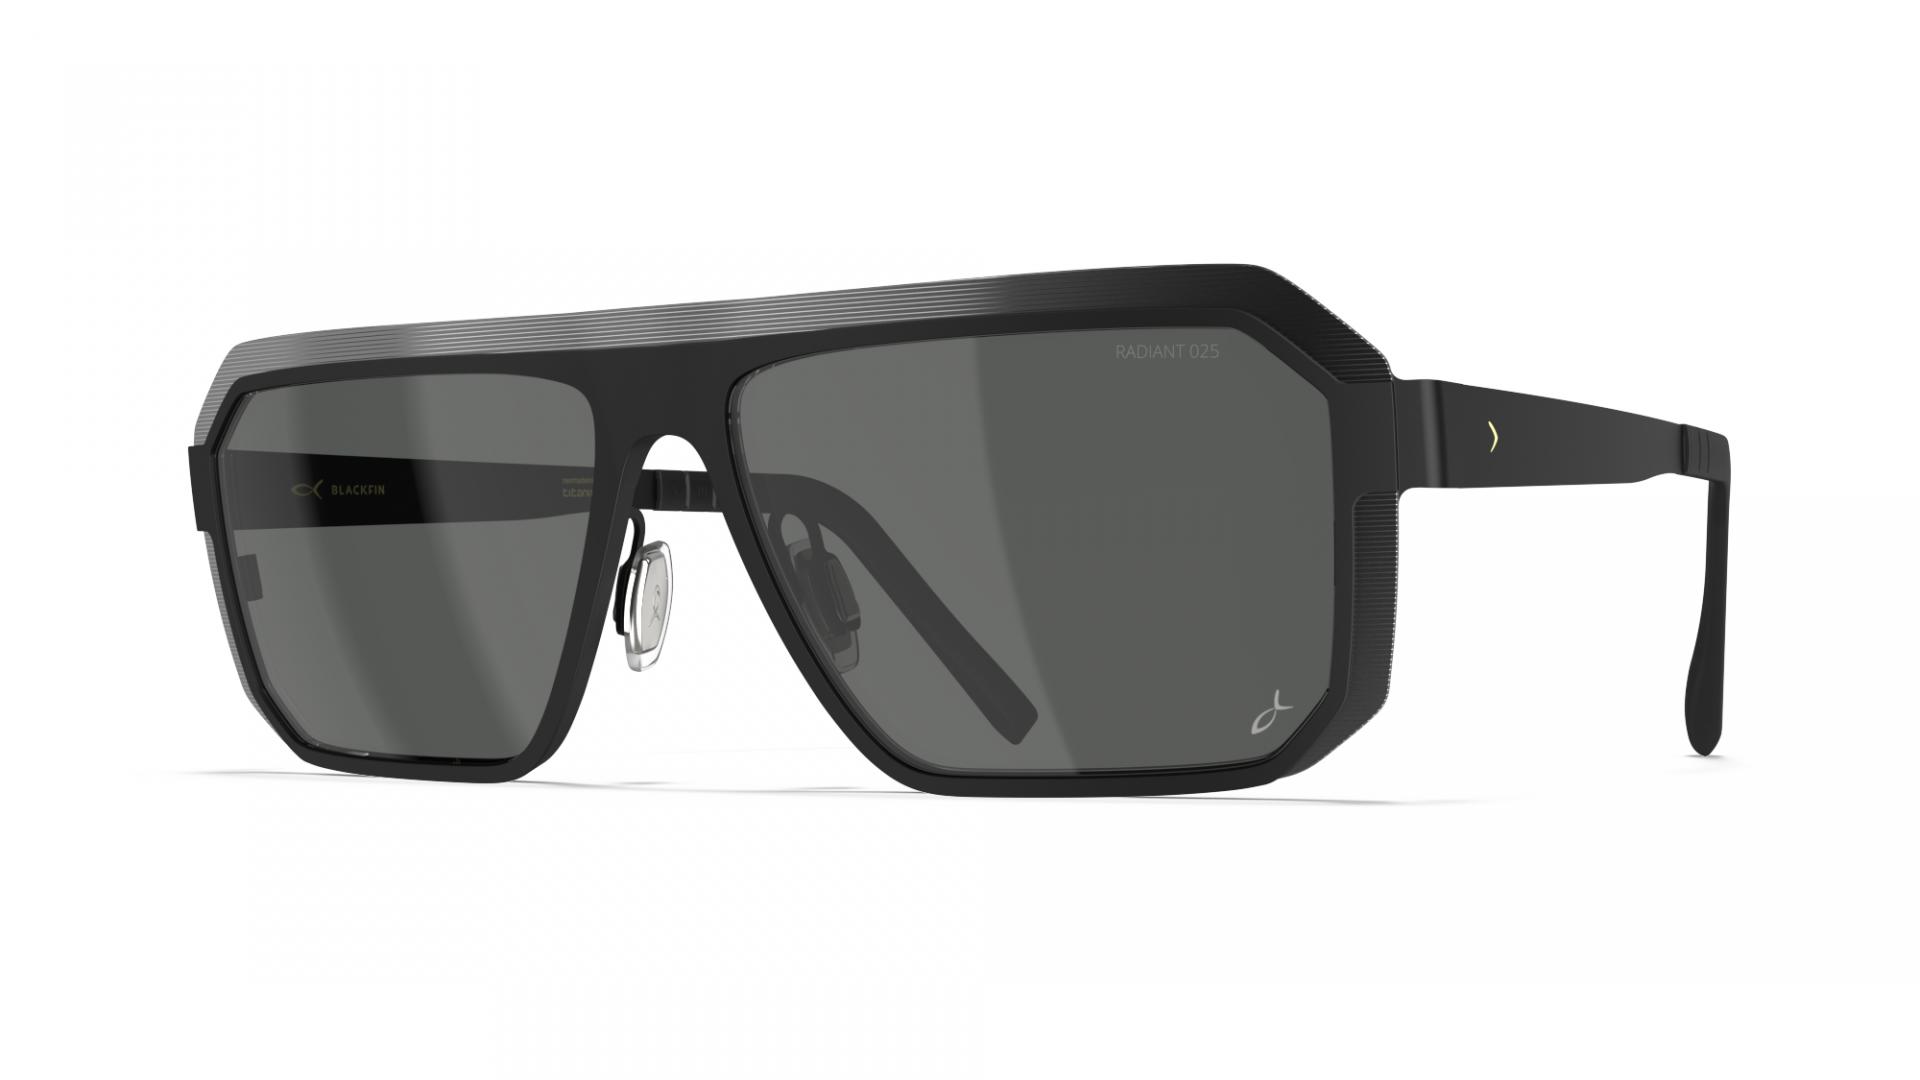 Designer Men Sunglasses Blackfin black | Blackfin Horizon Squared 